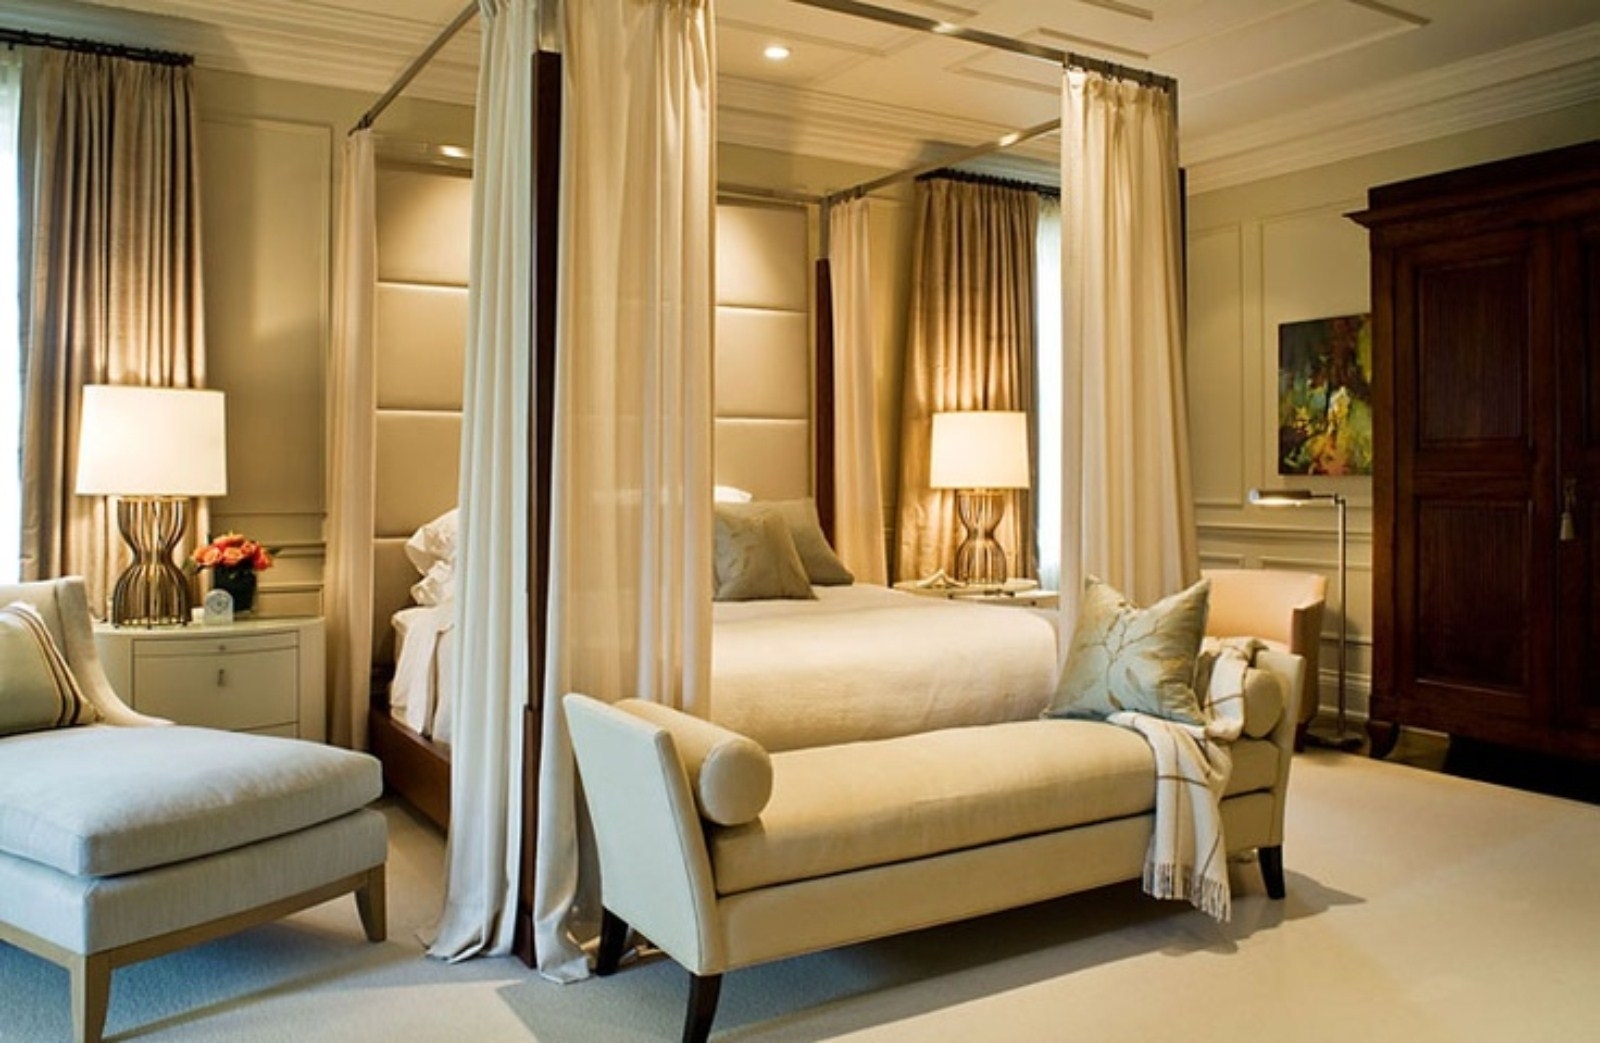 Romantic Traditional Master Bedroom Ideas